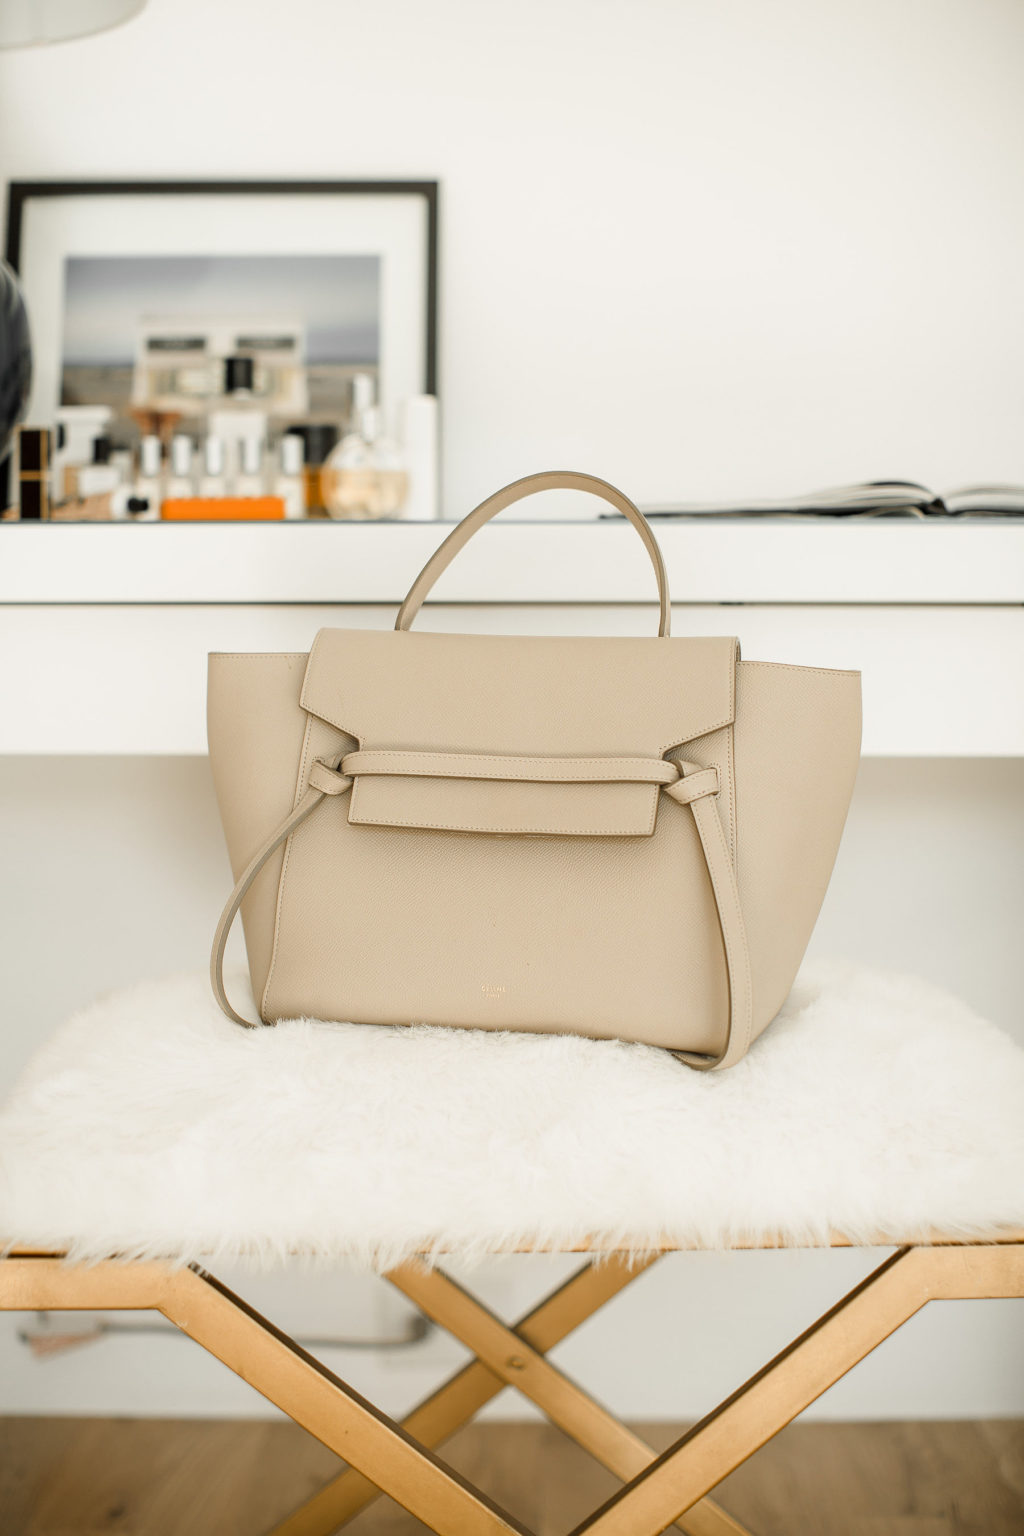 Celine Belt Bag Review, Fashion & Style